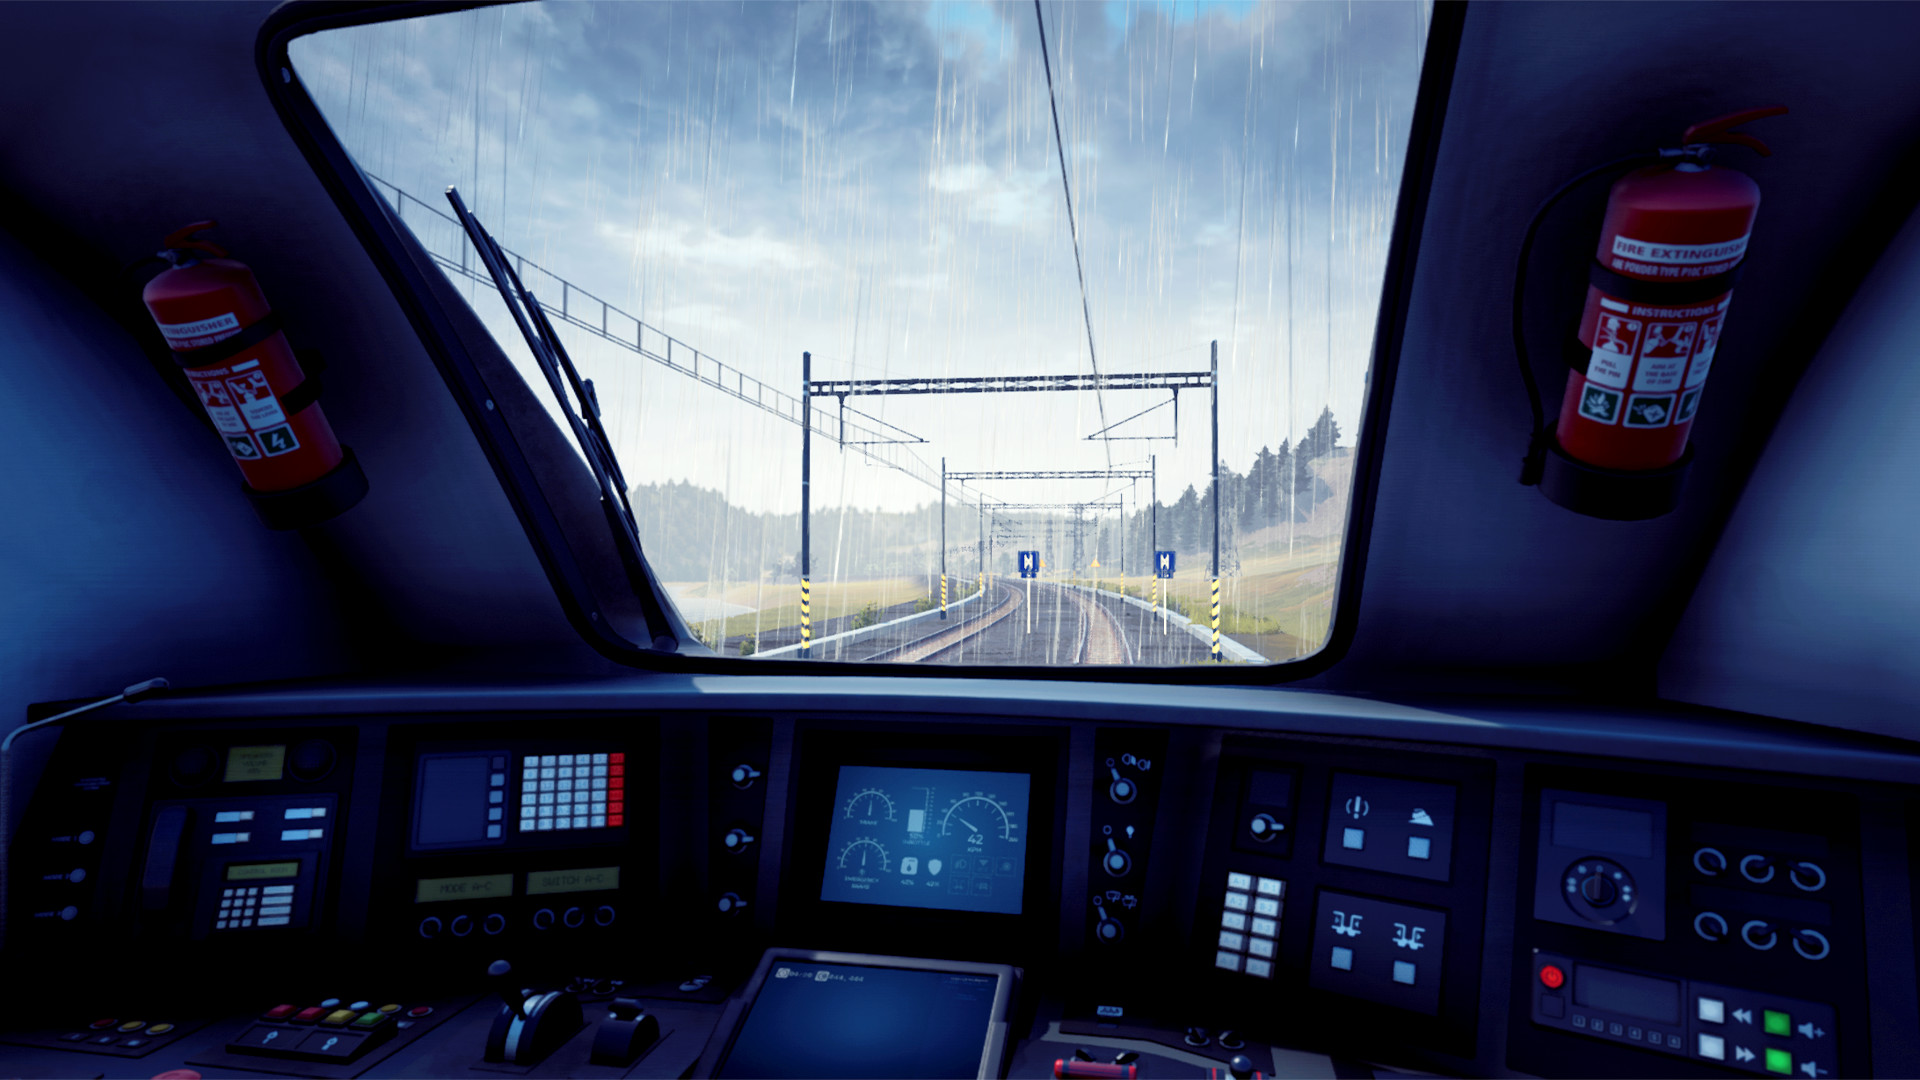 Train Life: A Railway Simulator EU V2 Steam Altergift